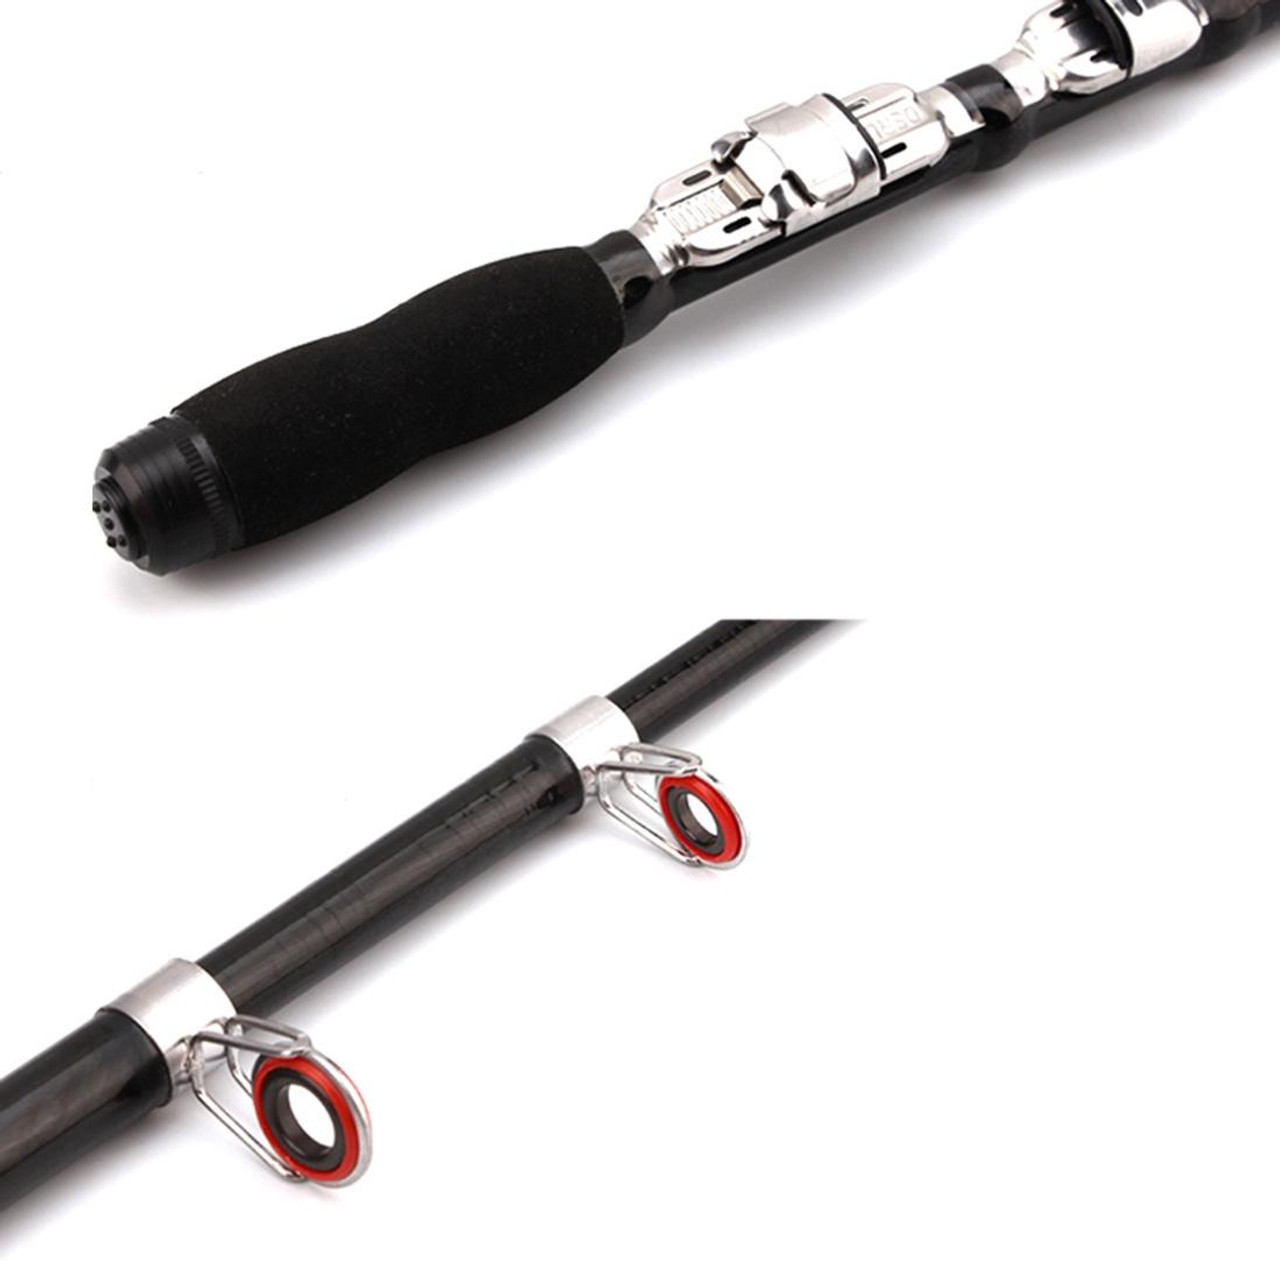 32cm Portable Telescopic Sea Fishing Rod Mini Fishing Pole, Extended Length  : 1.5m, Black Clip Reel Seat, snatcher